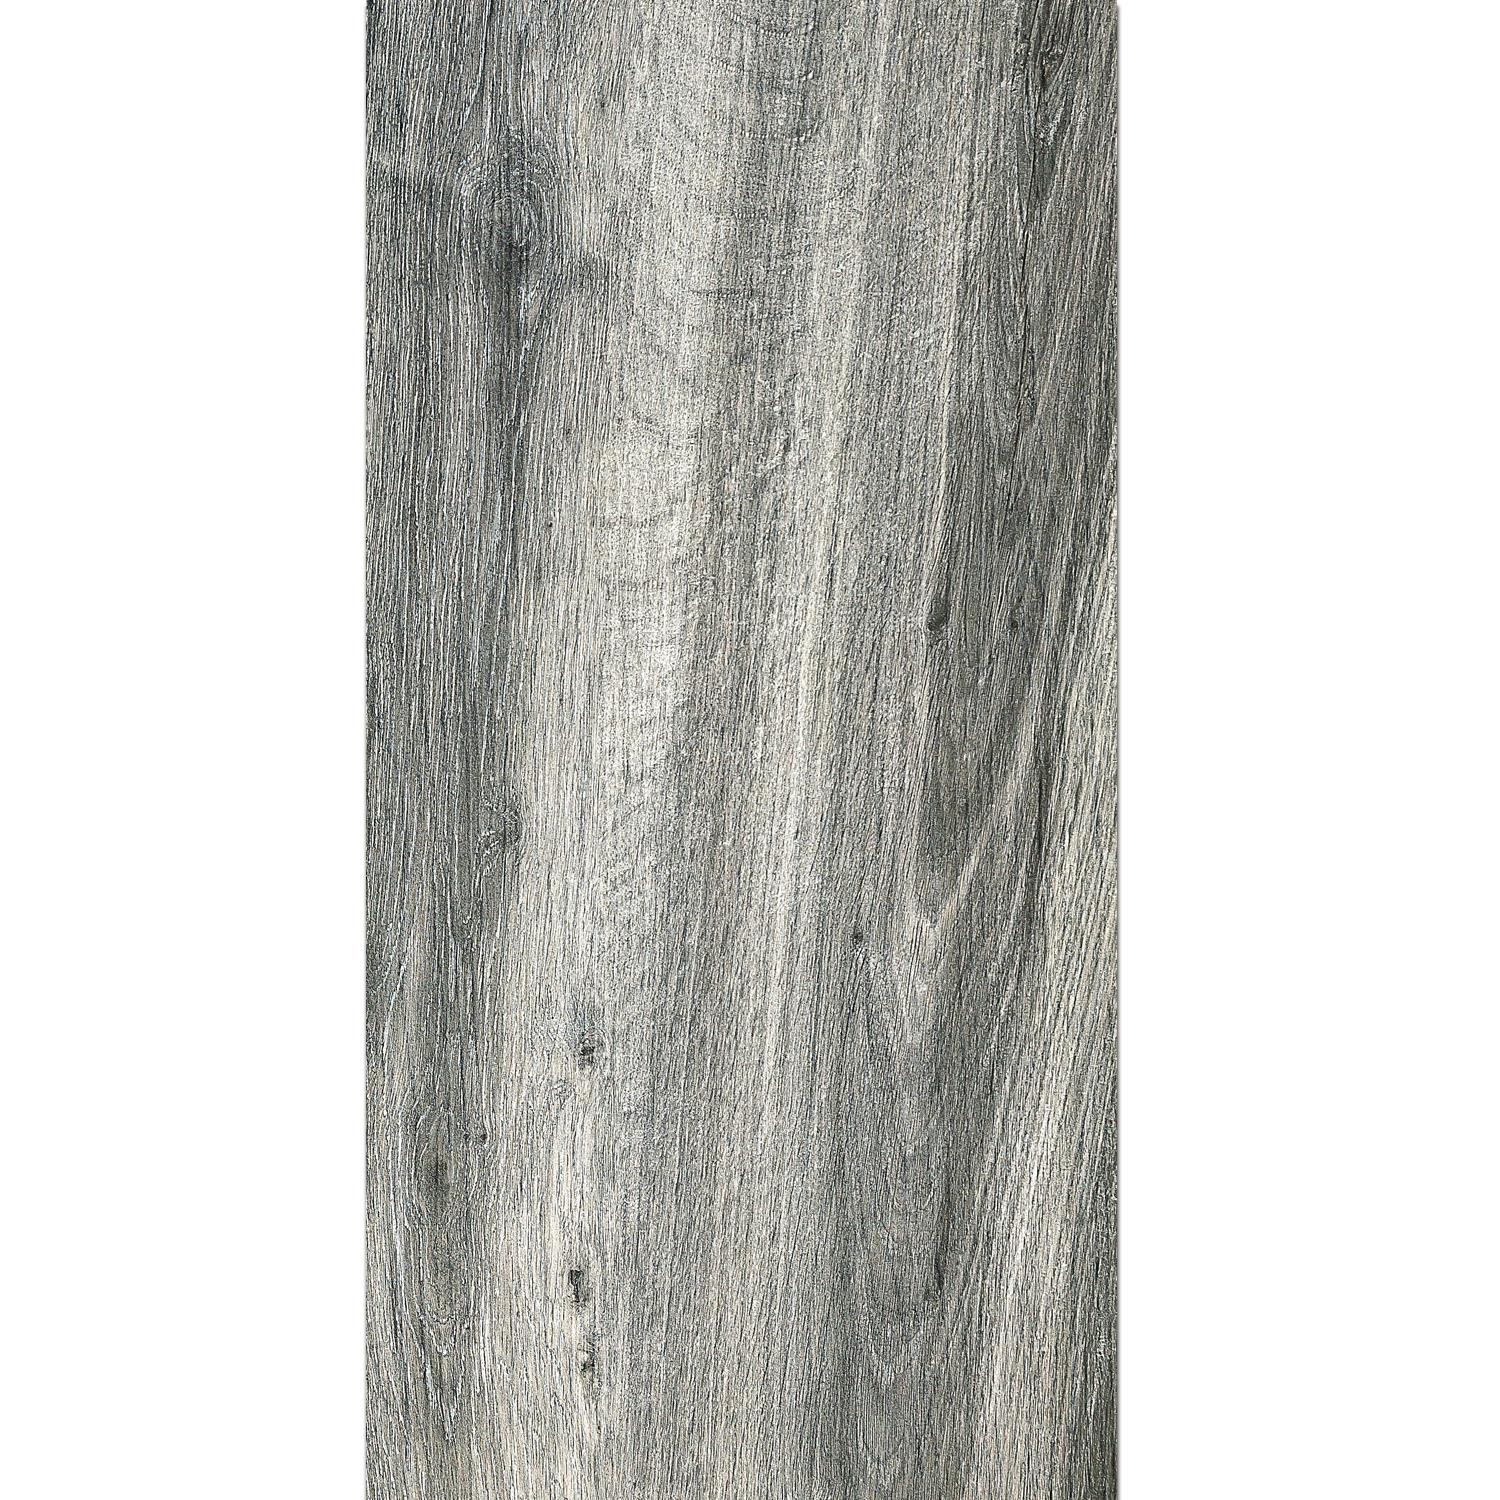 Dalles De Terrasse Starwood Imitation Bois Grey 45x90cm